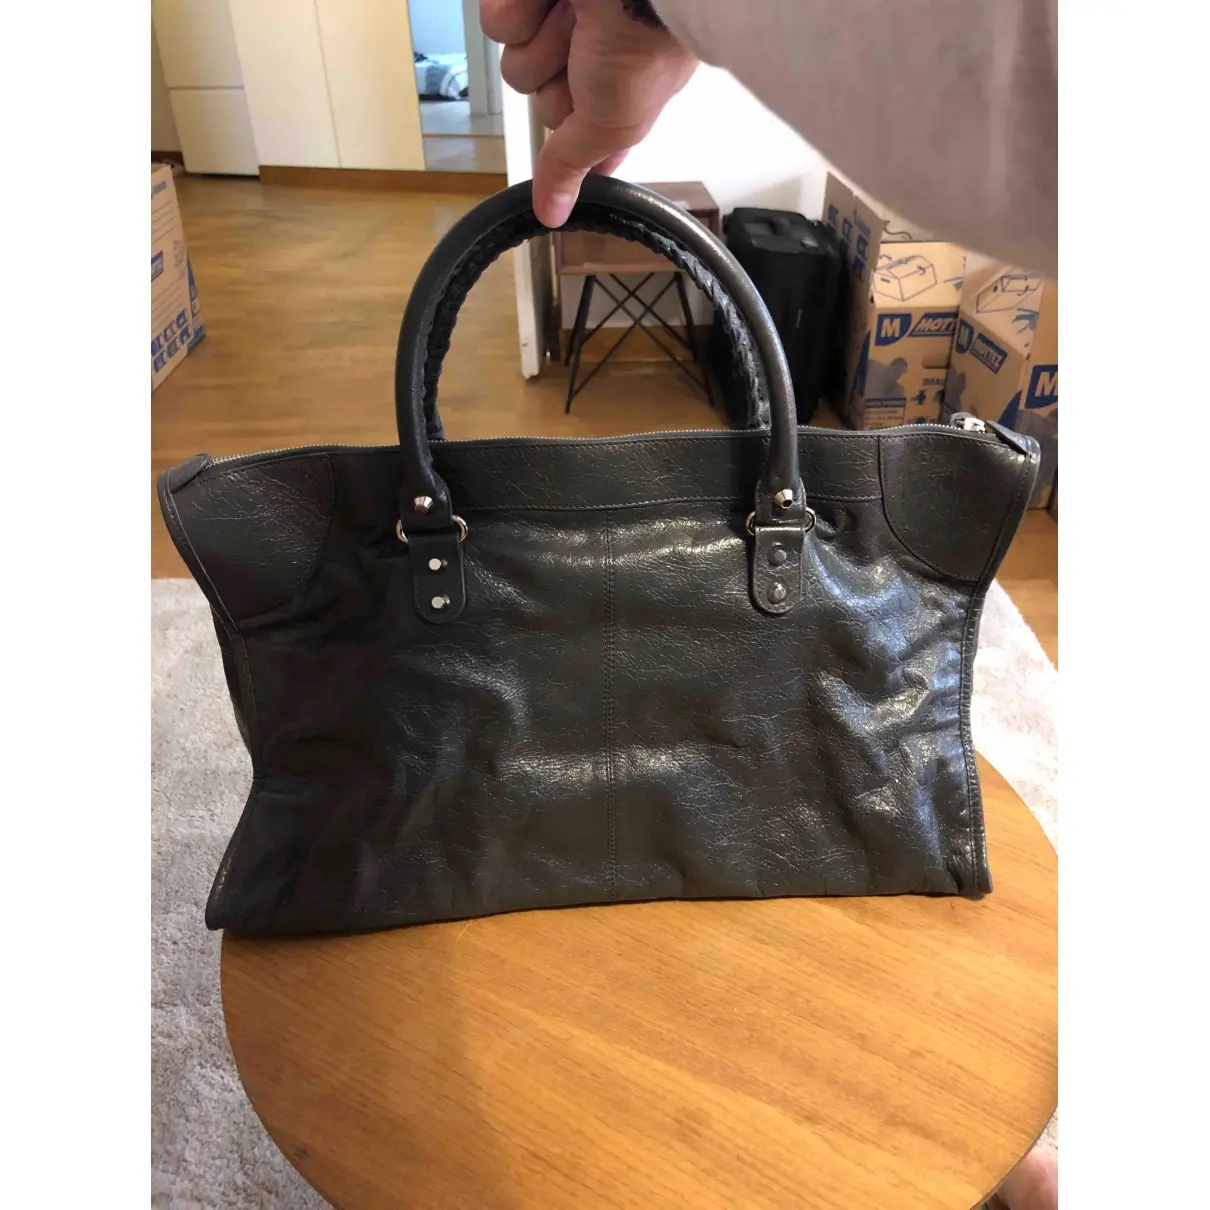 Balenciaga Classic Metalic leather handbag for sale